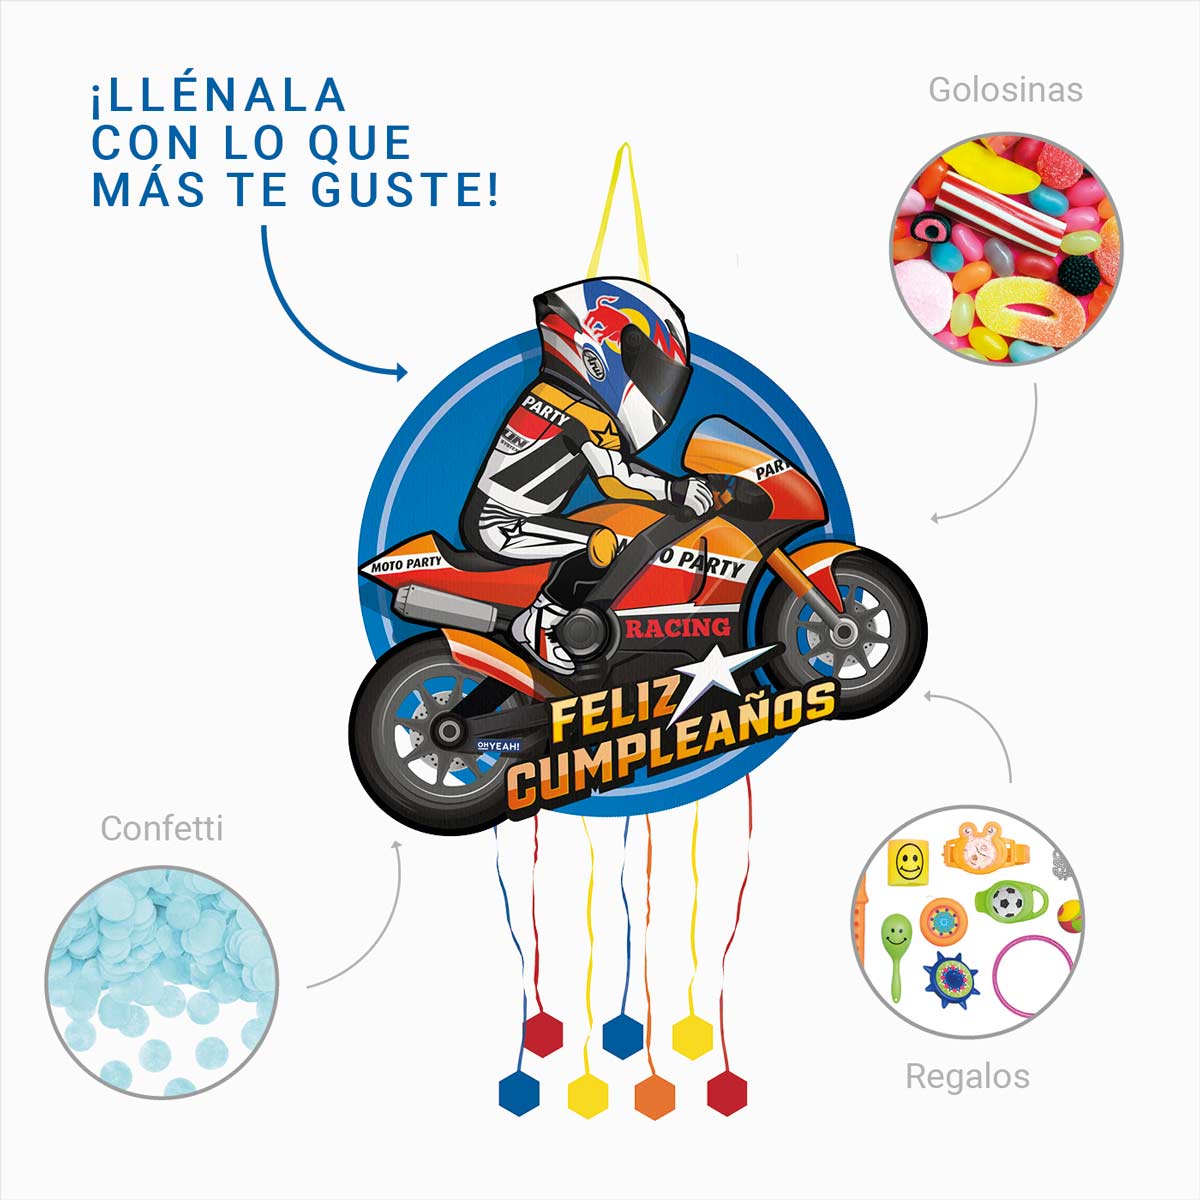 Piñata "joyeux anniversaire" moto gp